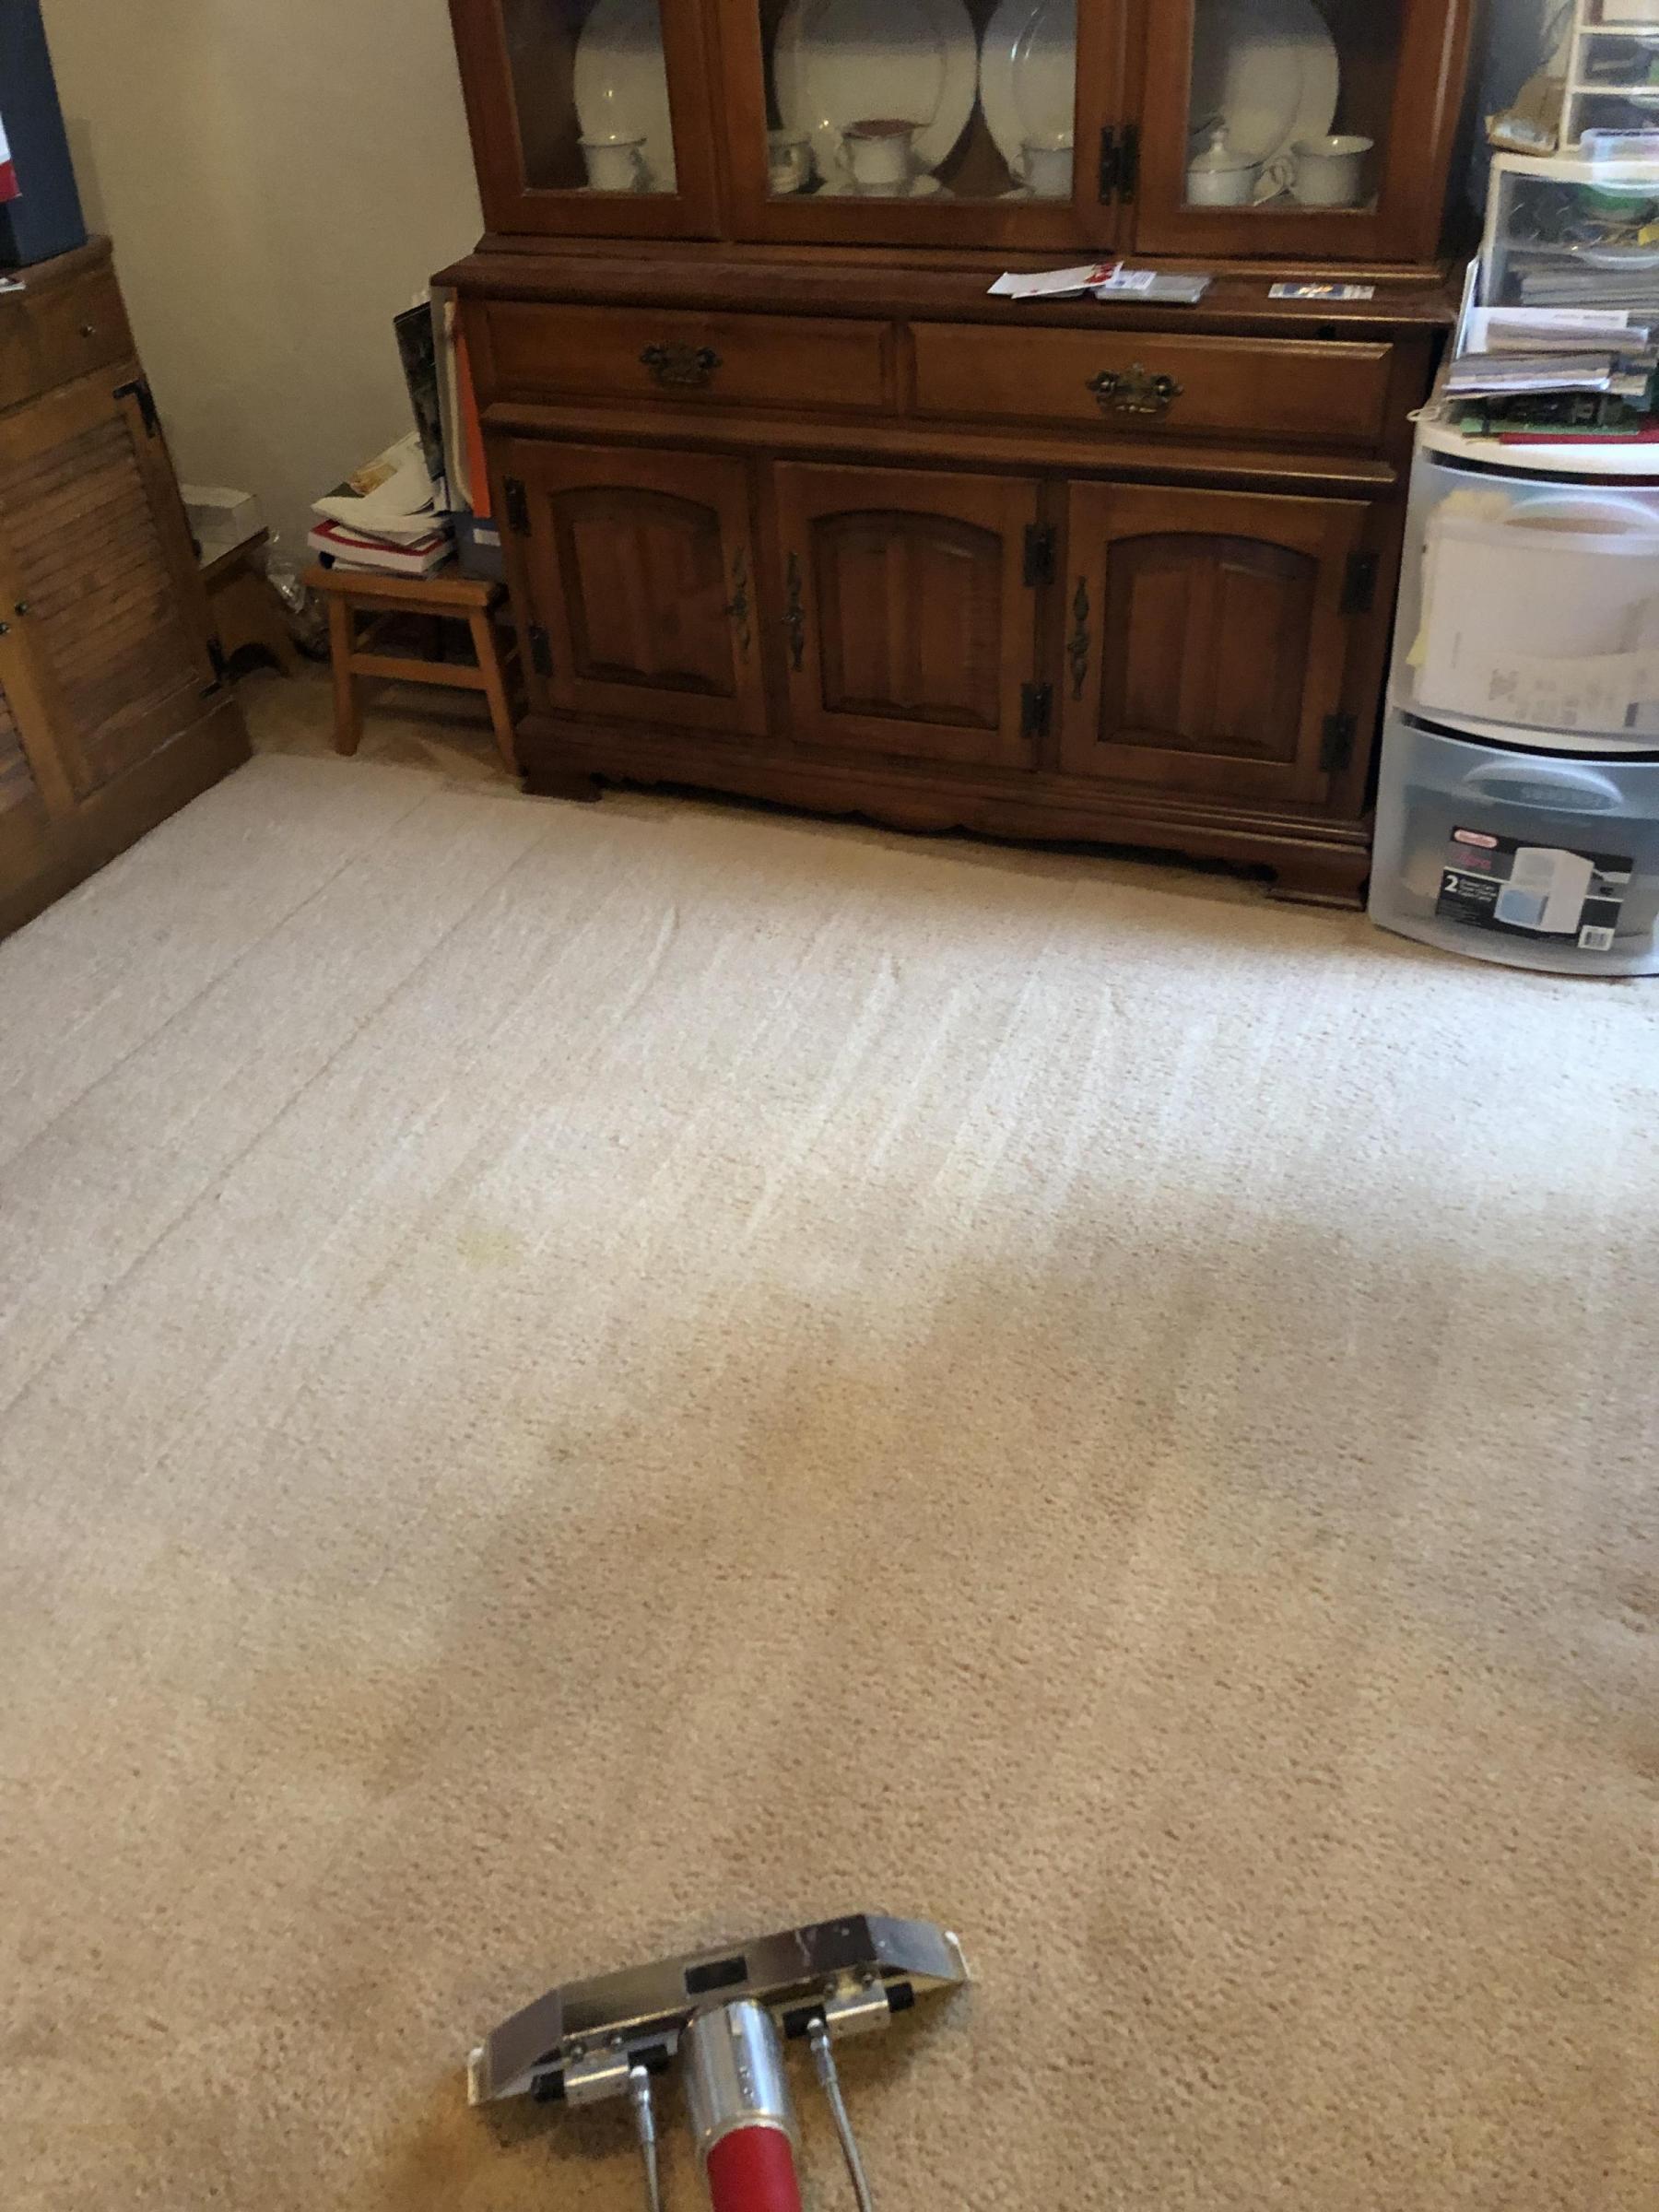 Find the Best Carpet Cleaning Services in Prescott Valley, AZ